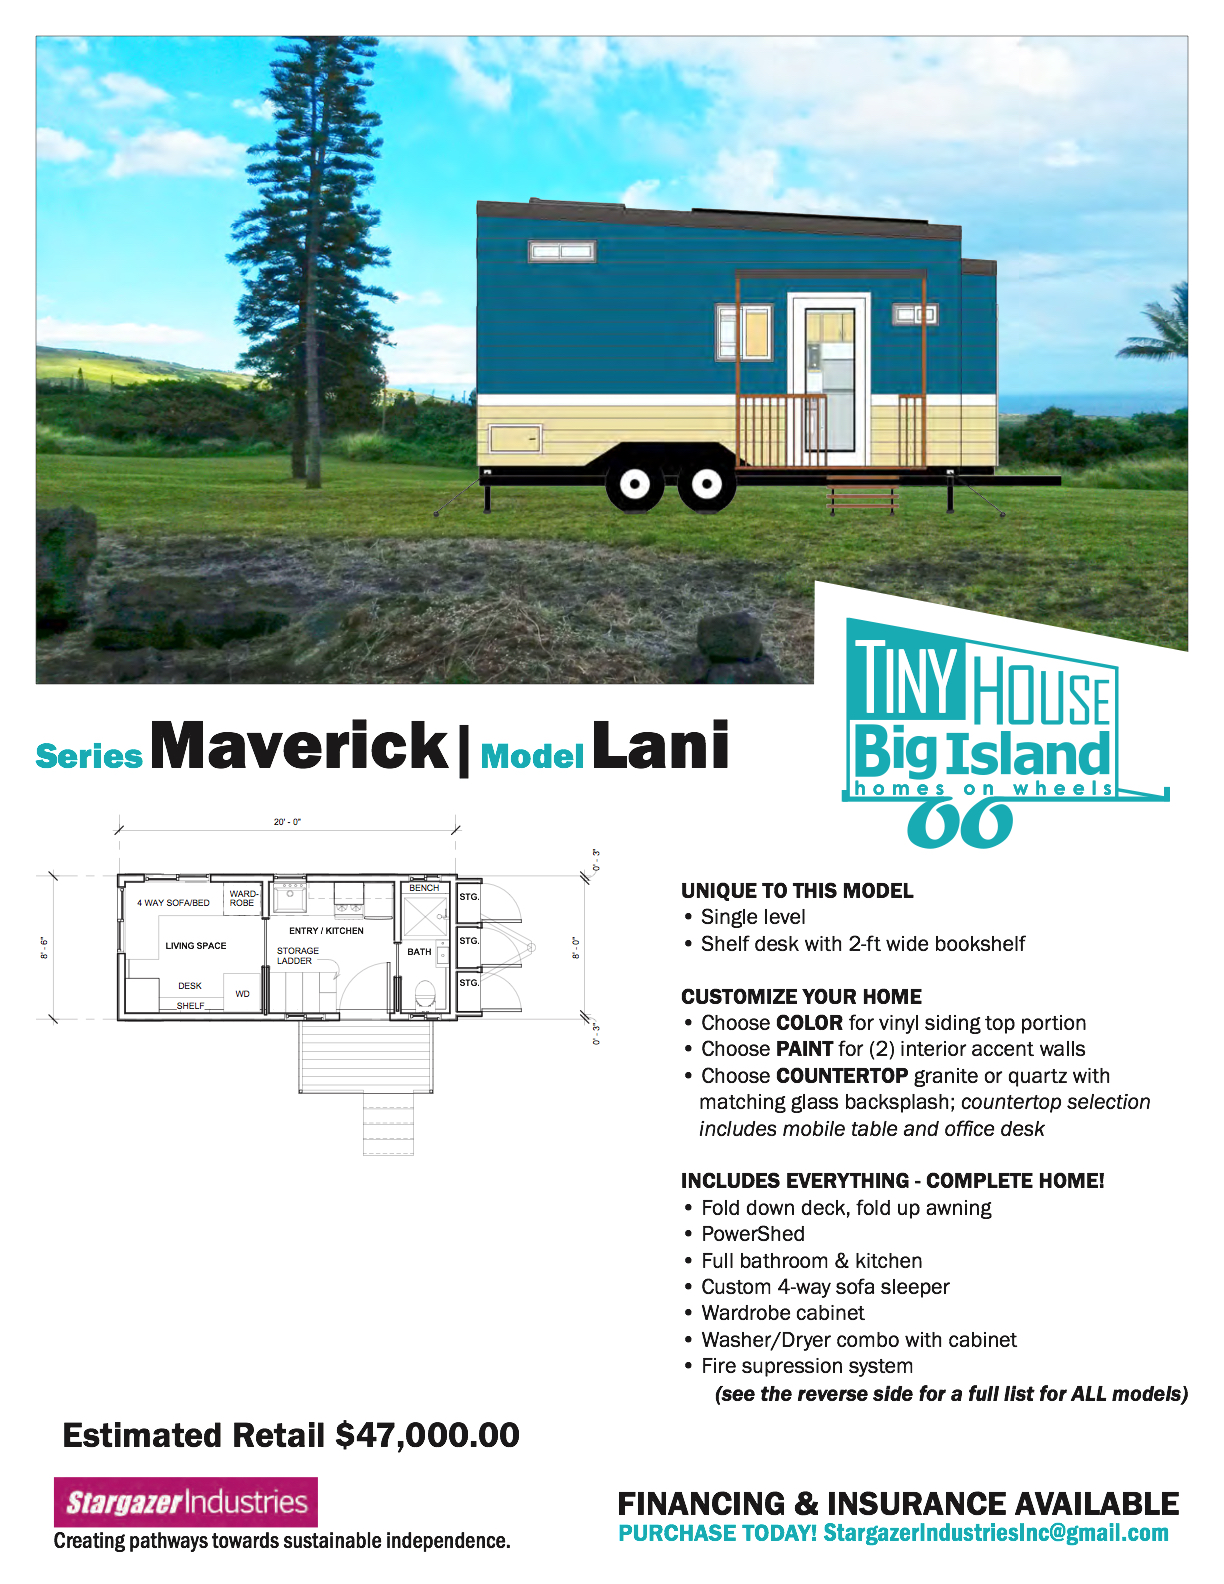 Update Tiny House Big Island Homes On